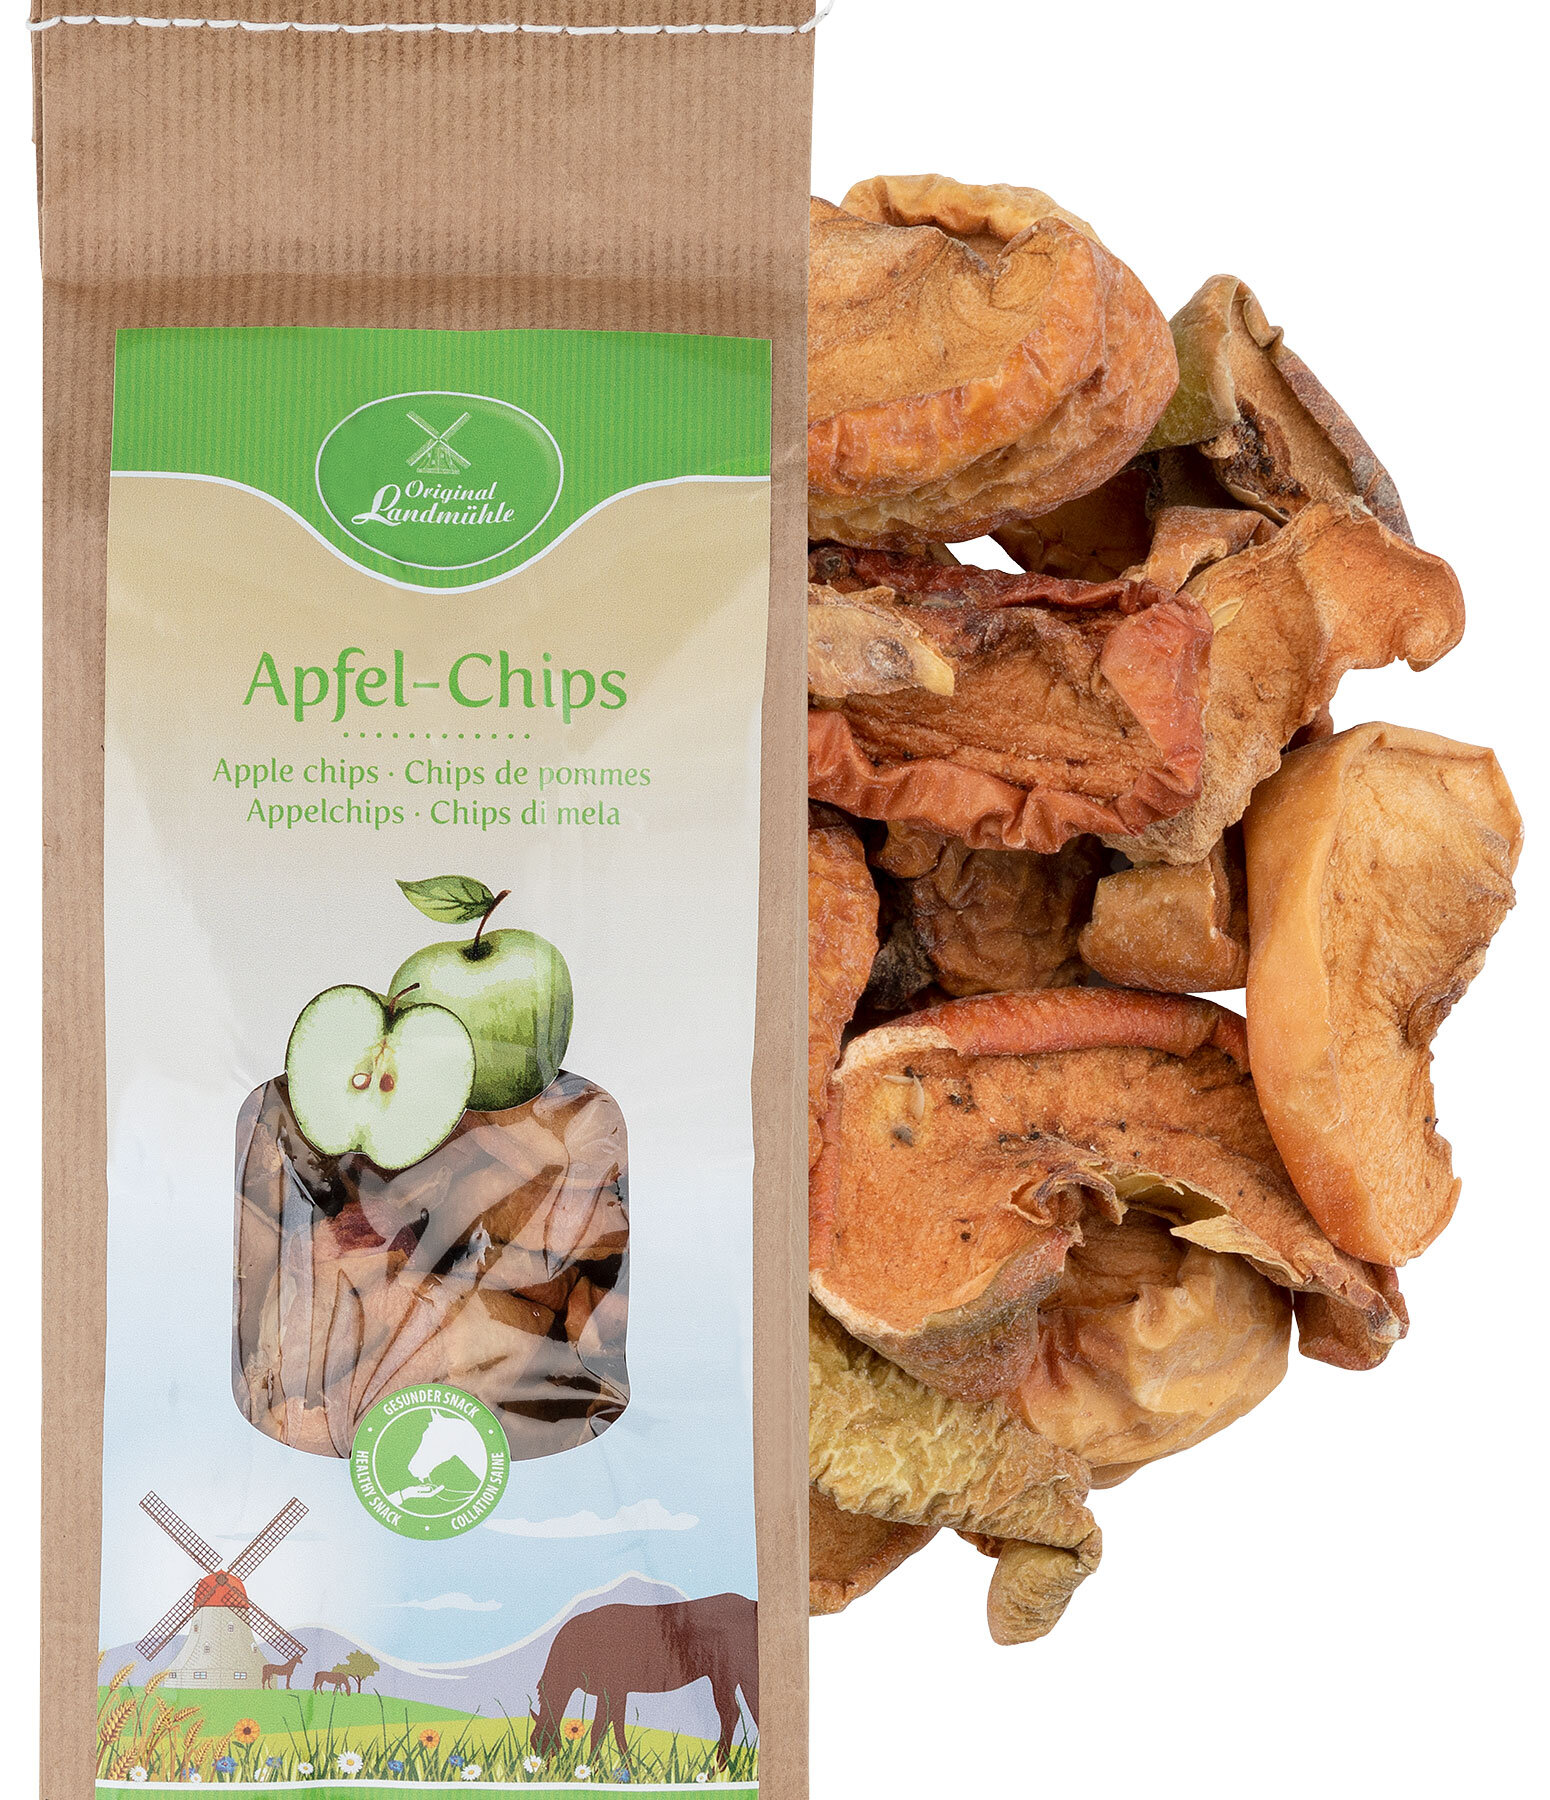 Apfel-Chips